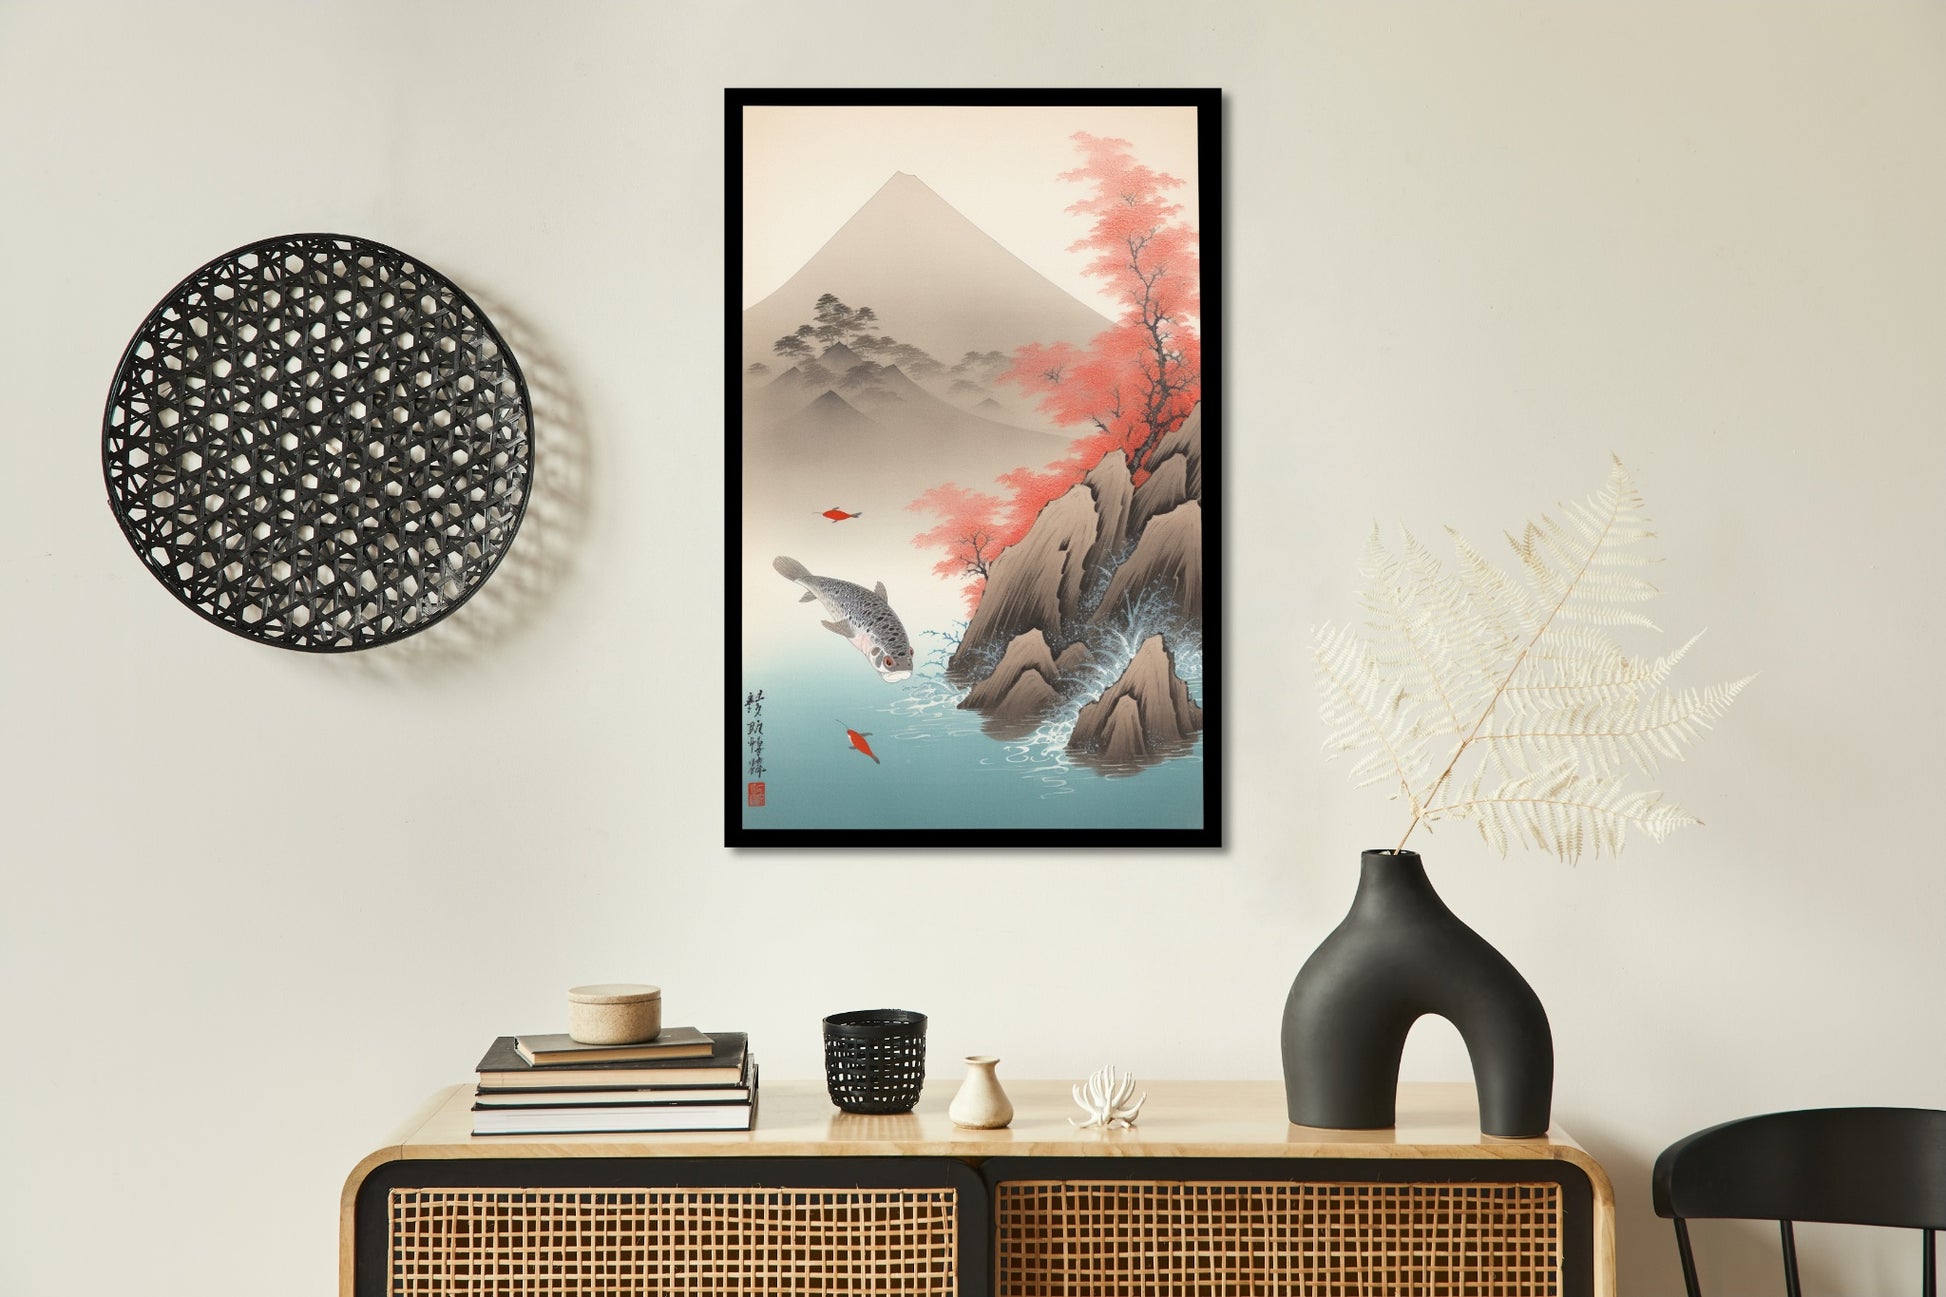 Mt. Fuji and Nature | Ukiyo-e Style Art | Buy Prints Online The